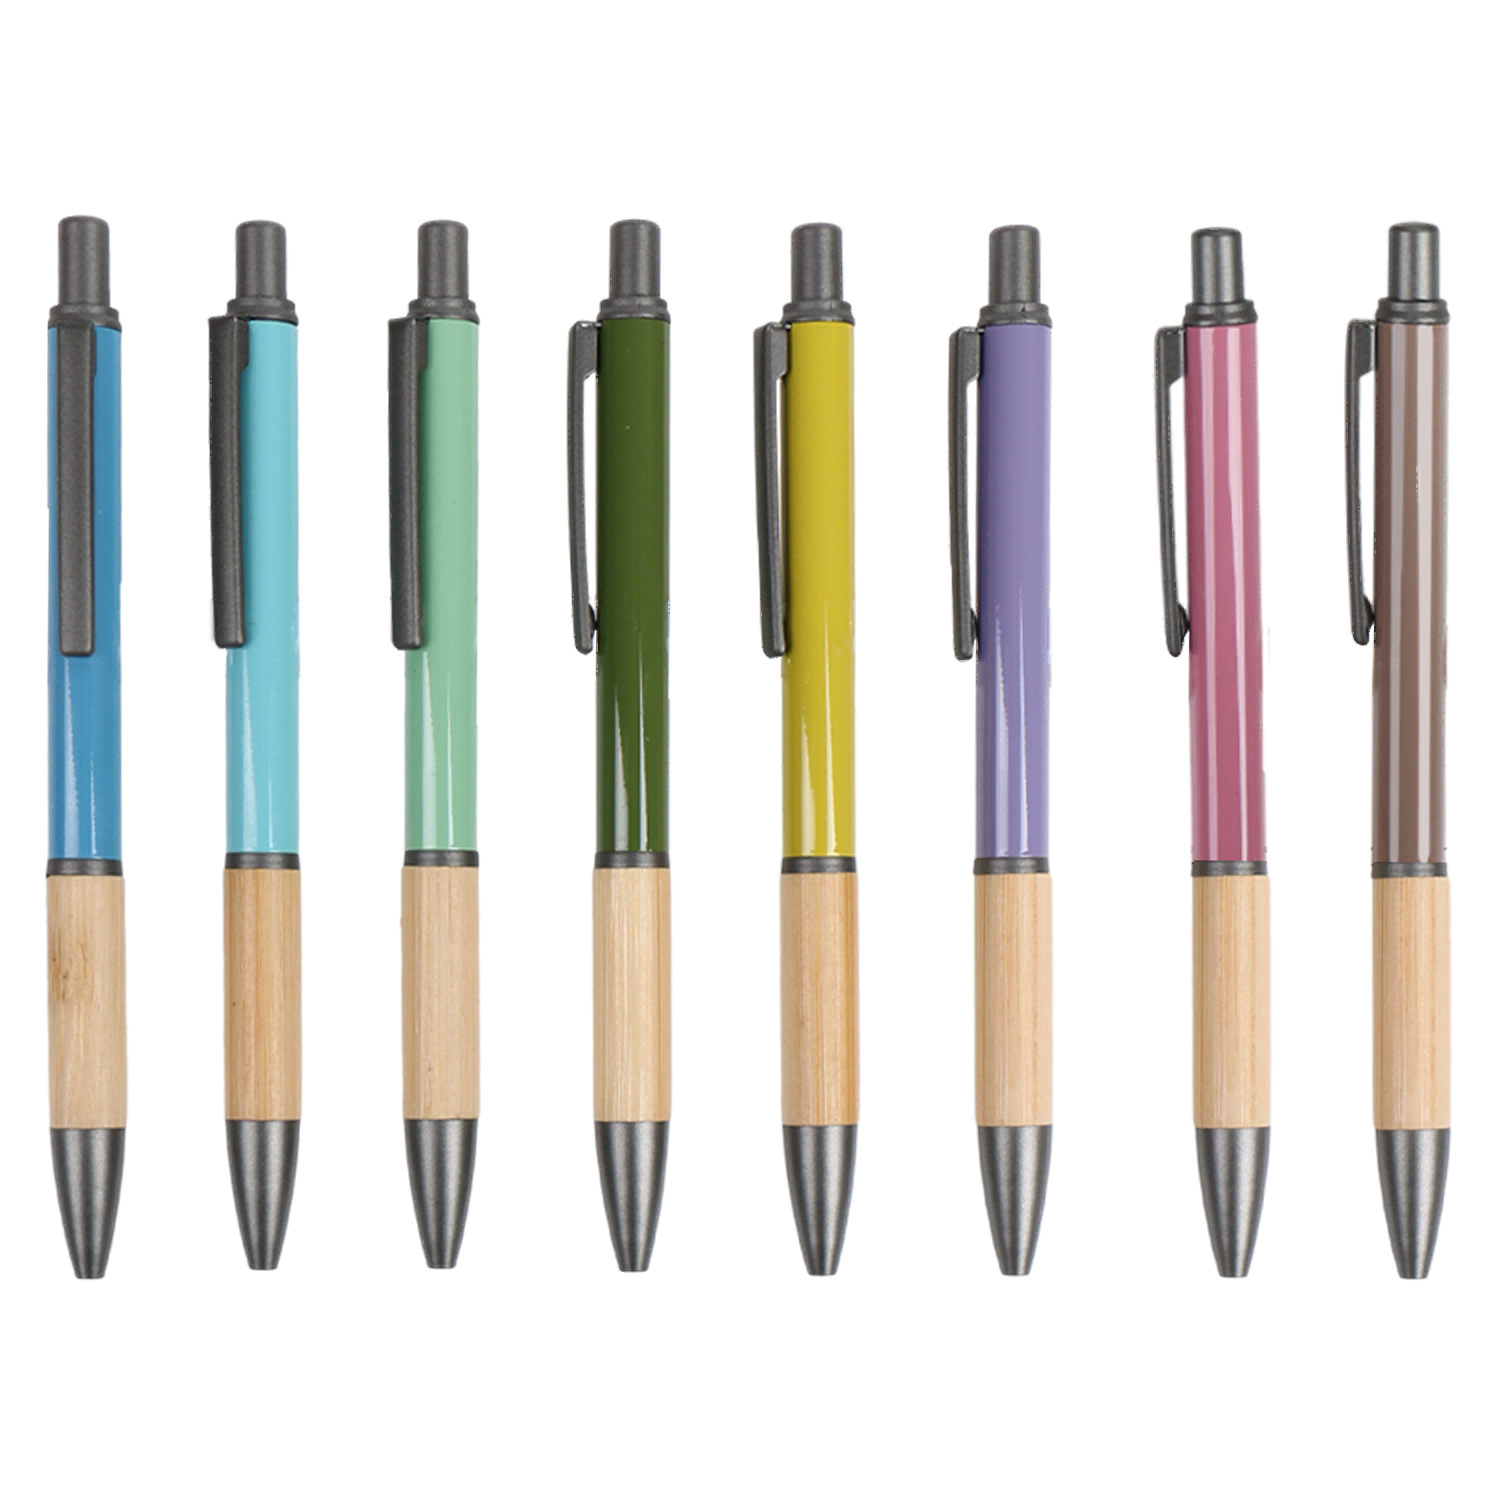 ODM splicing style wood sheathed aluminum rod ballpoint stationery pen